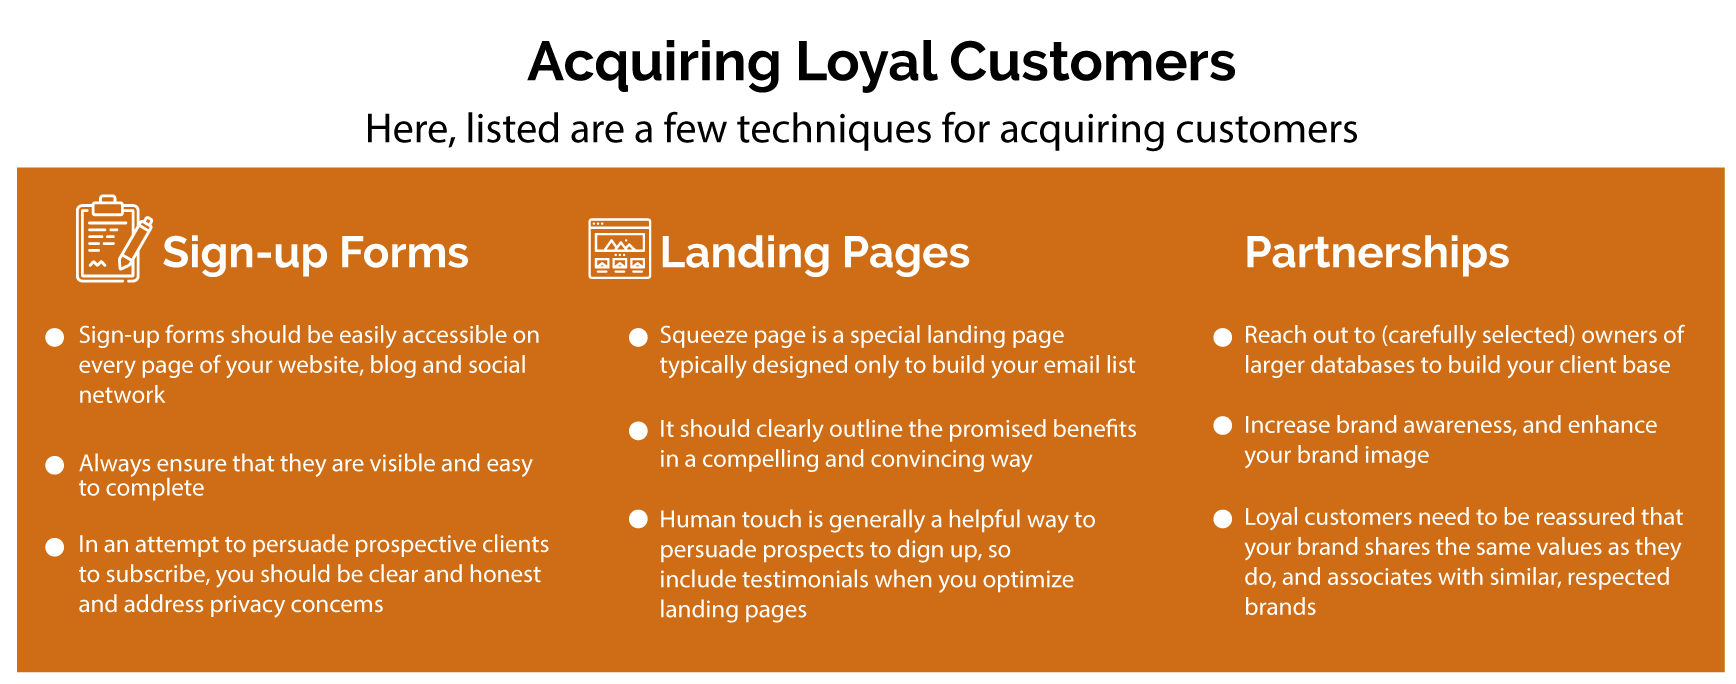 Acquiring Loyal Customers